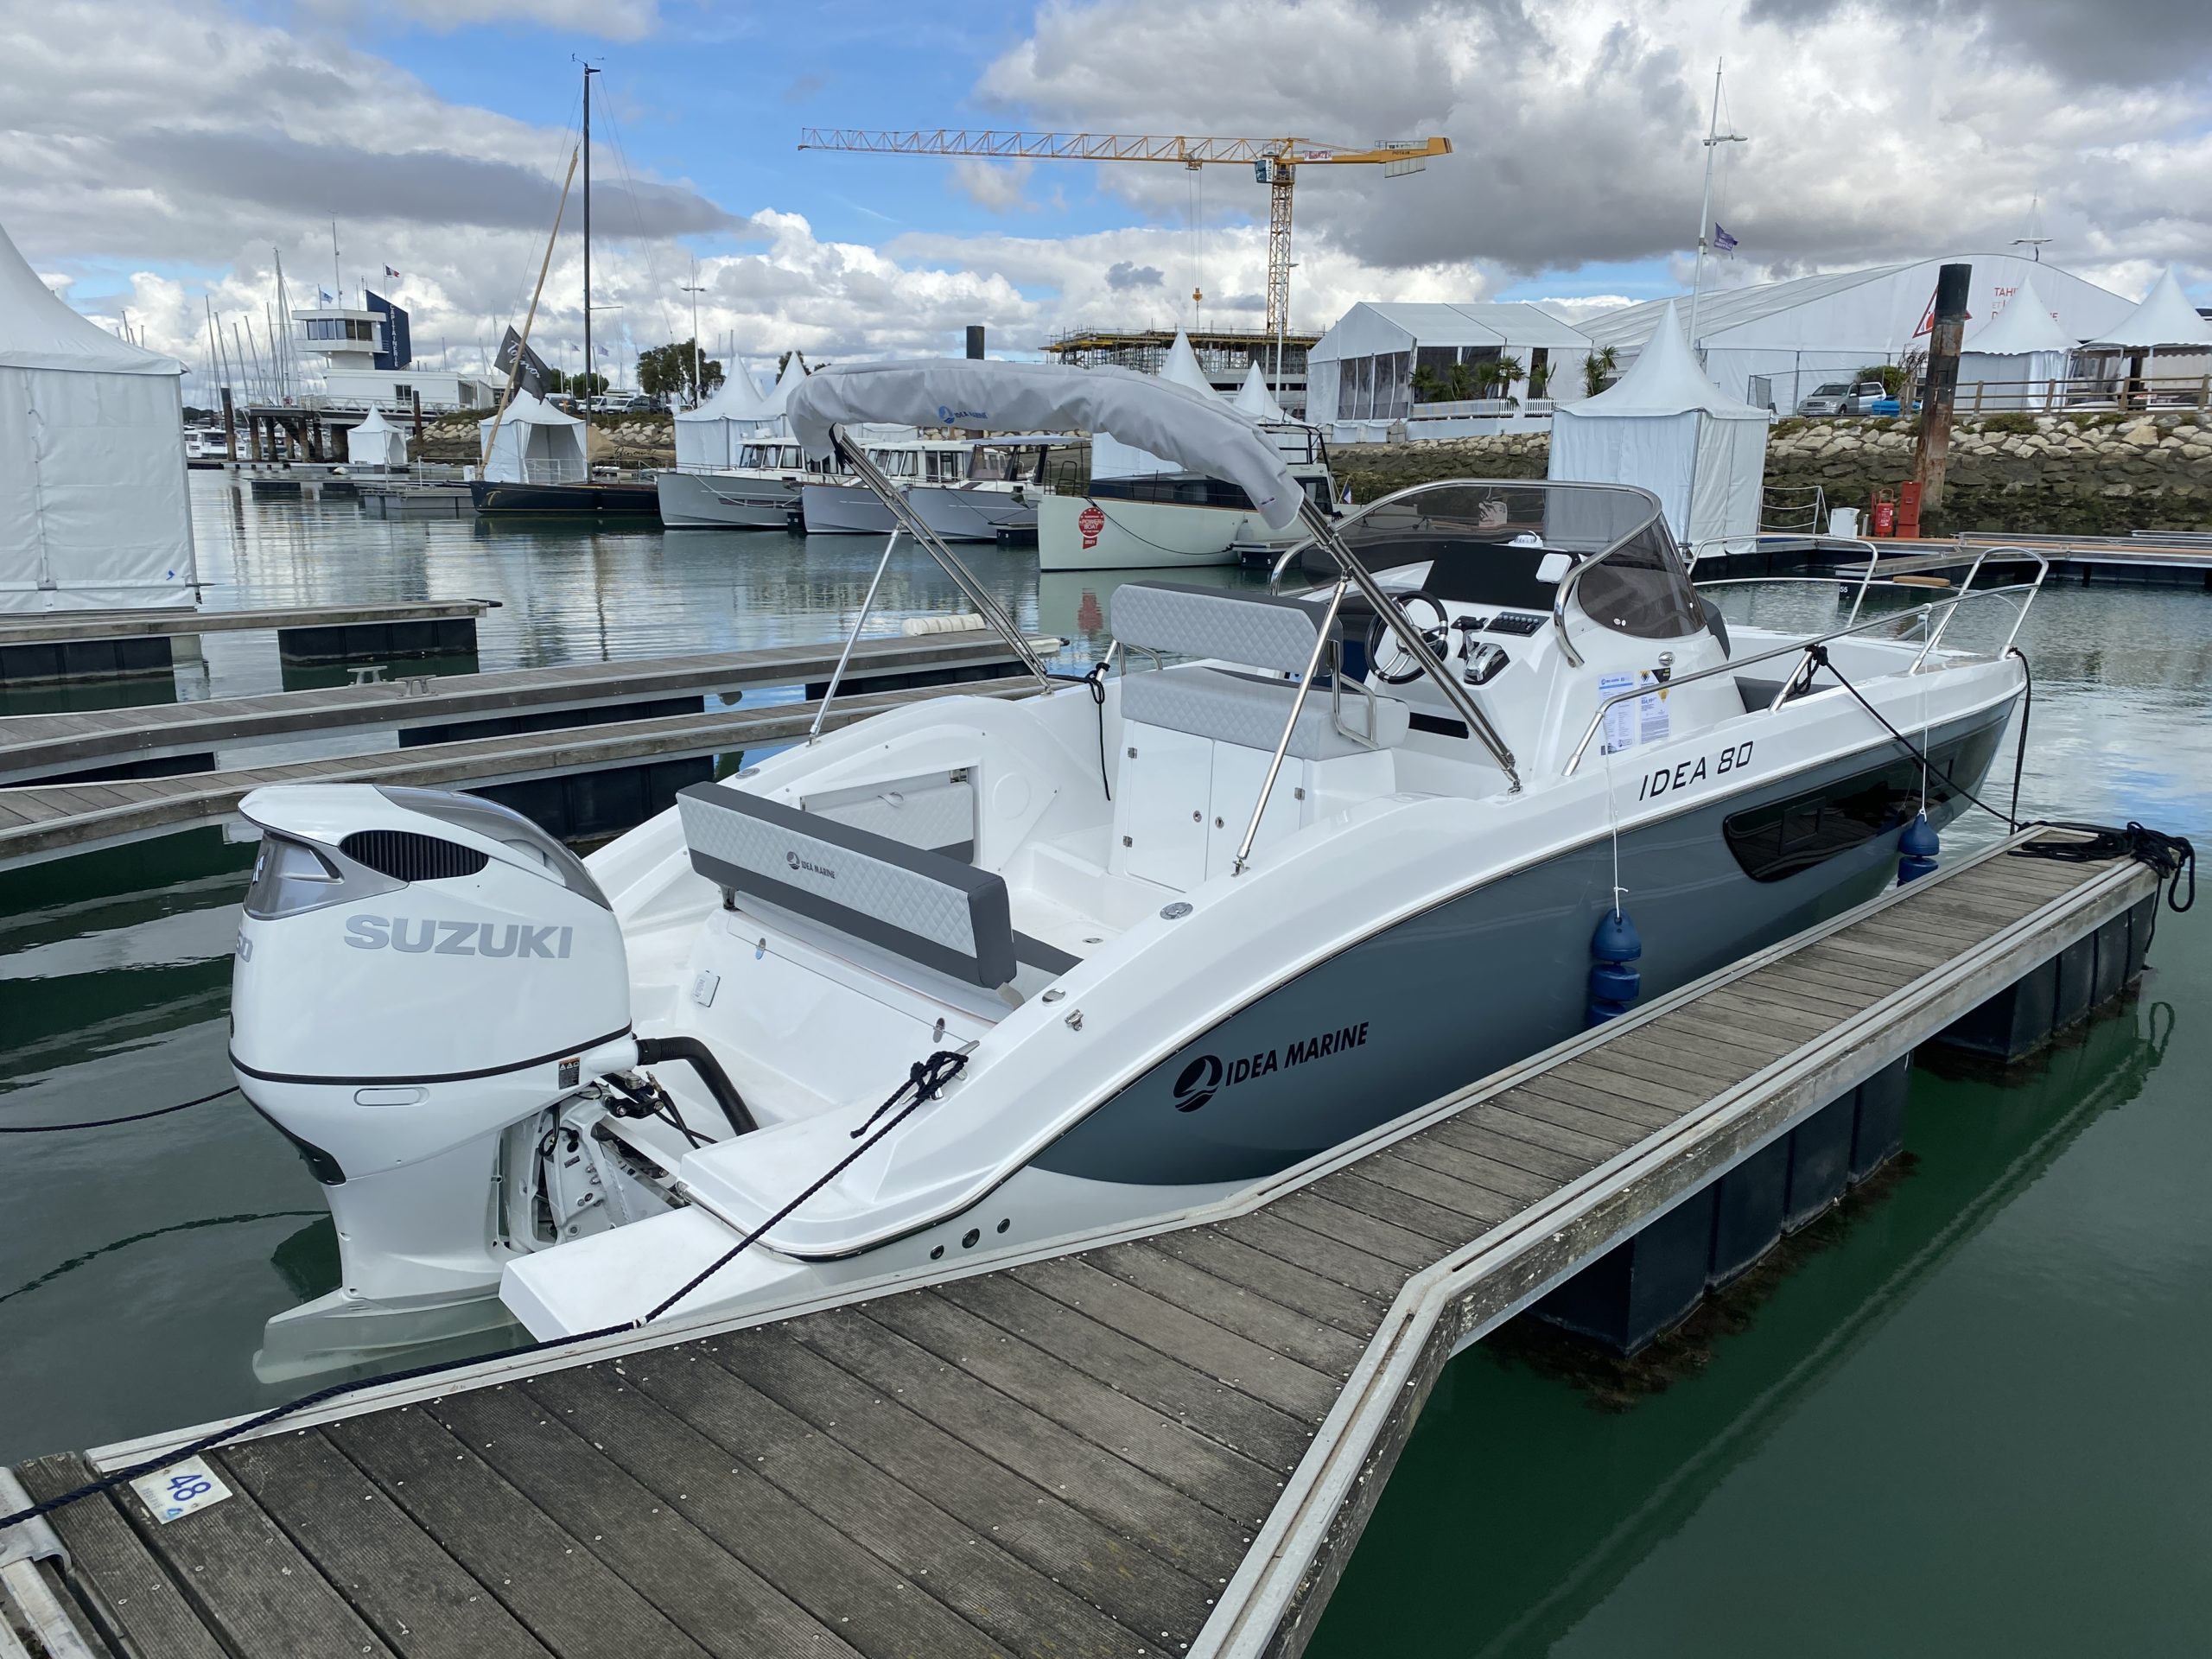 Nautique Services la Rochelle - Vente et entretien bateau - Idea Marine 80 WA Suzuki 350cv